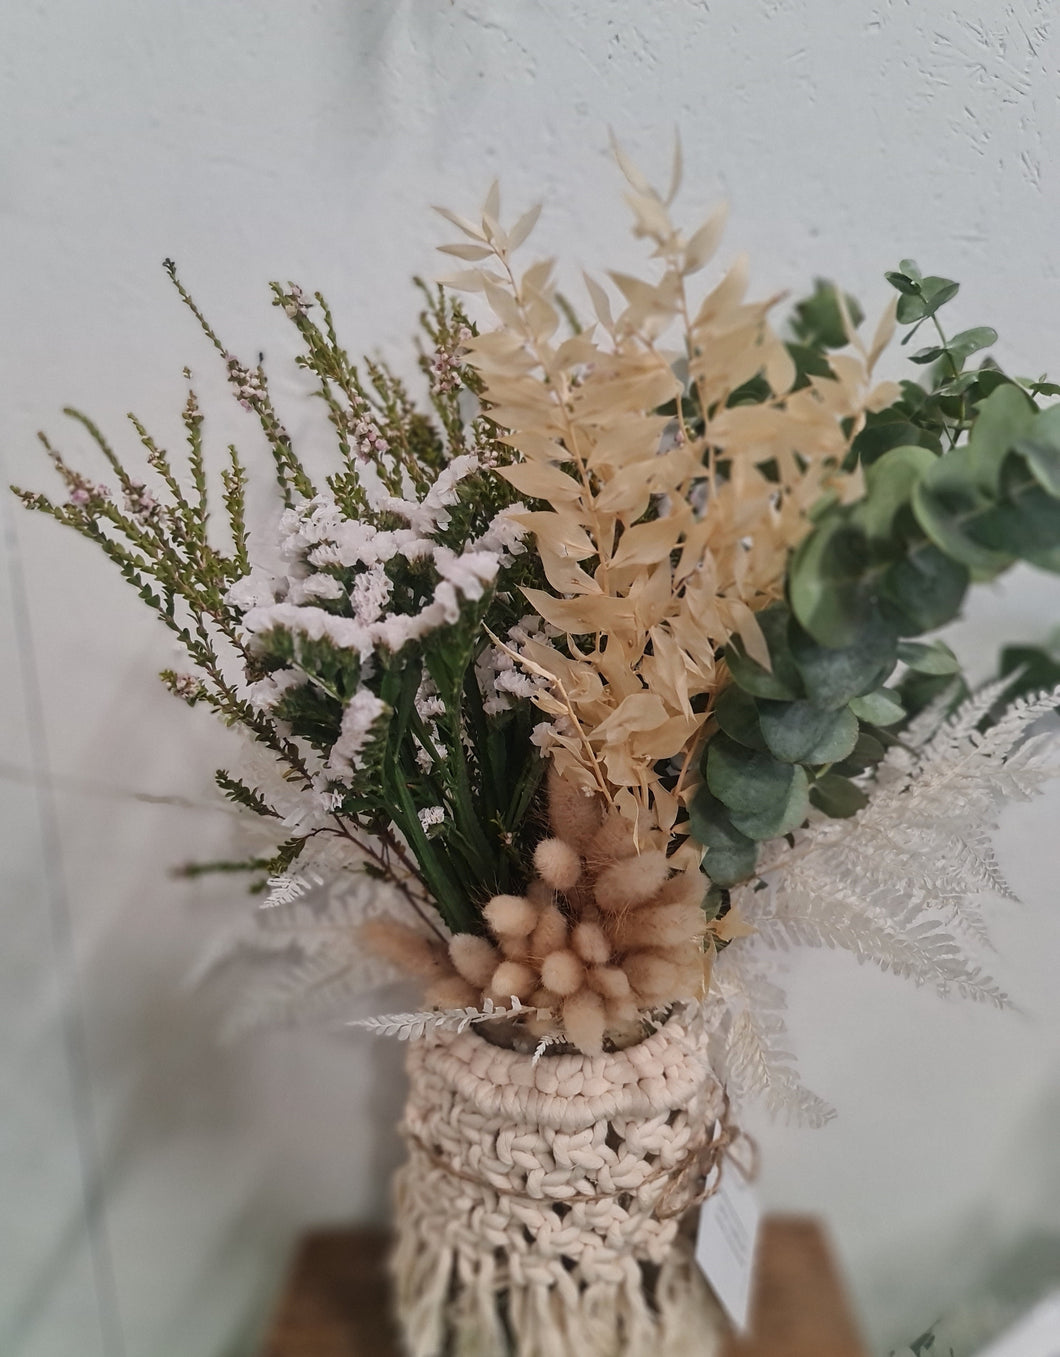 Macrame dried flower vase in natural.